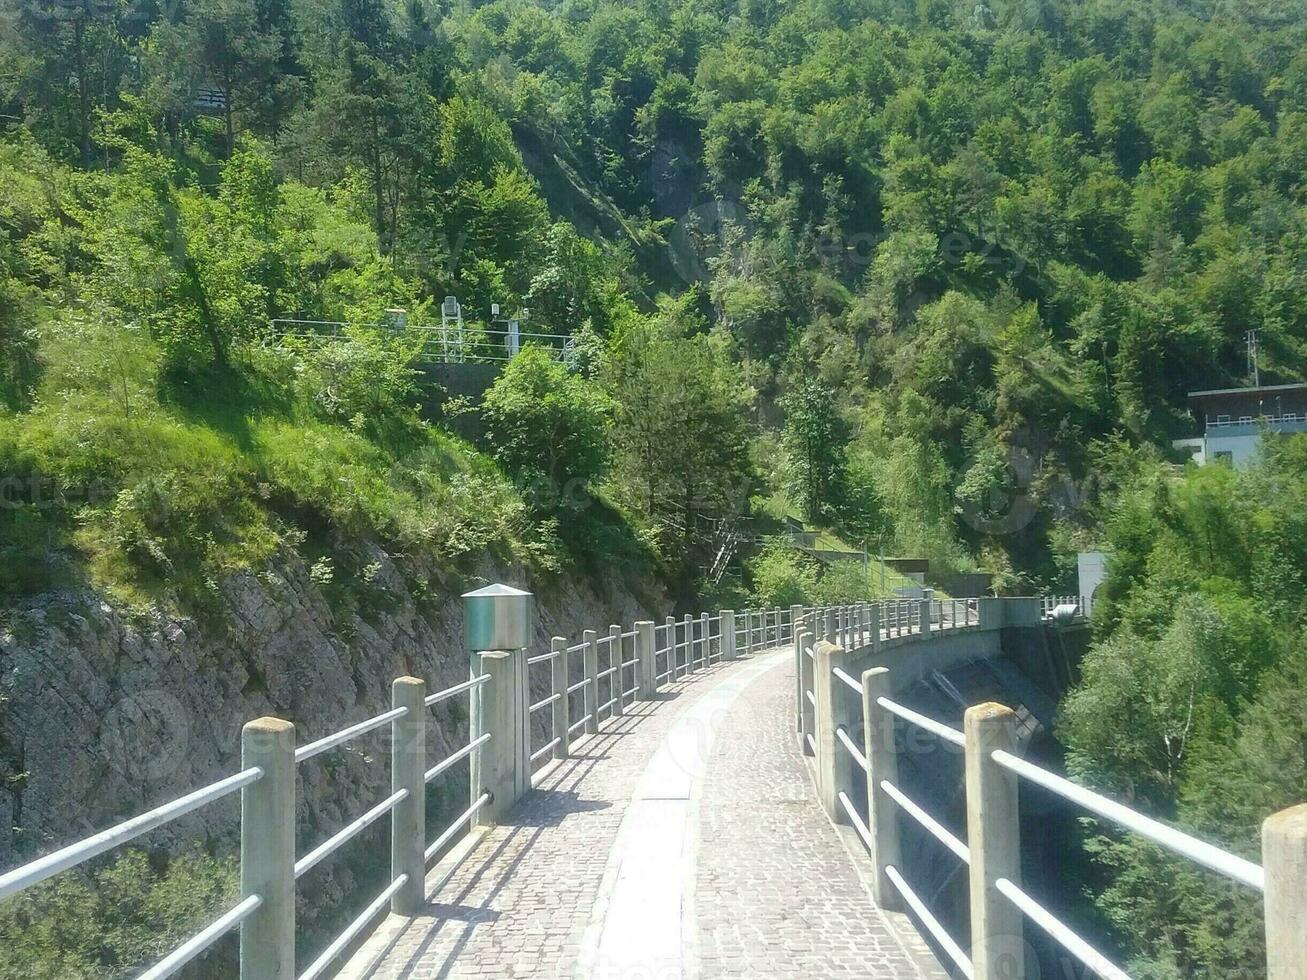 A metal pedestrian bridge below the hydroelectric dam photo